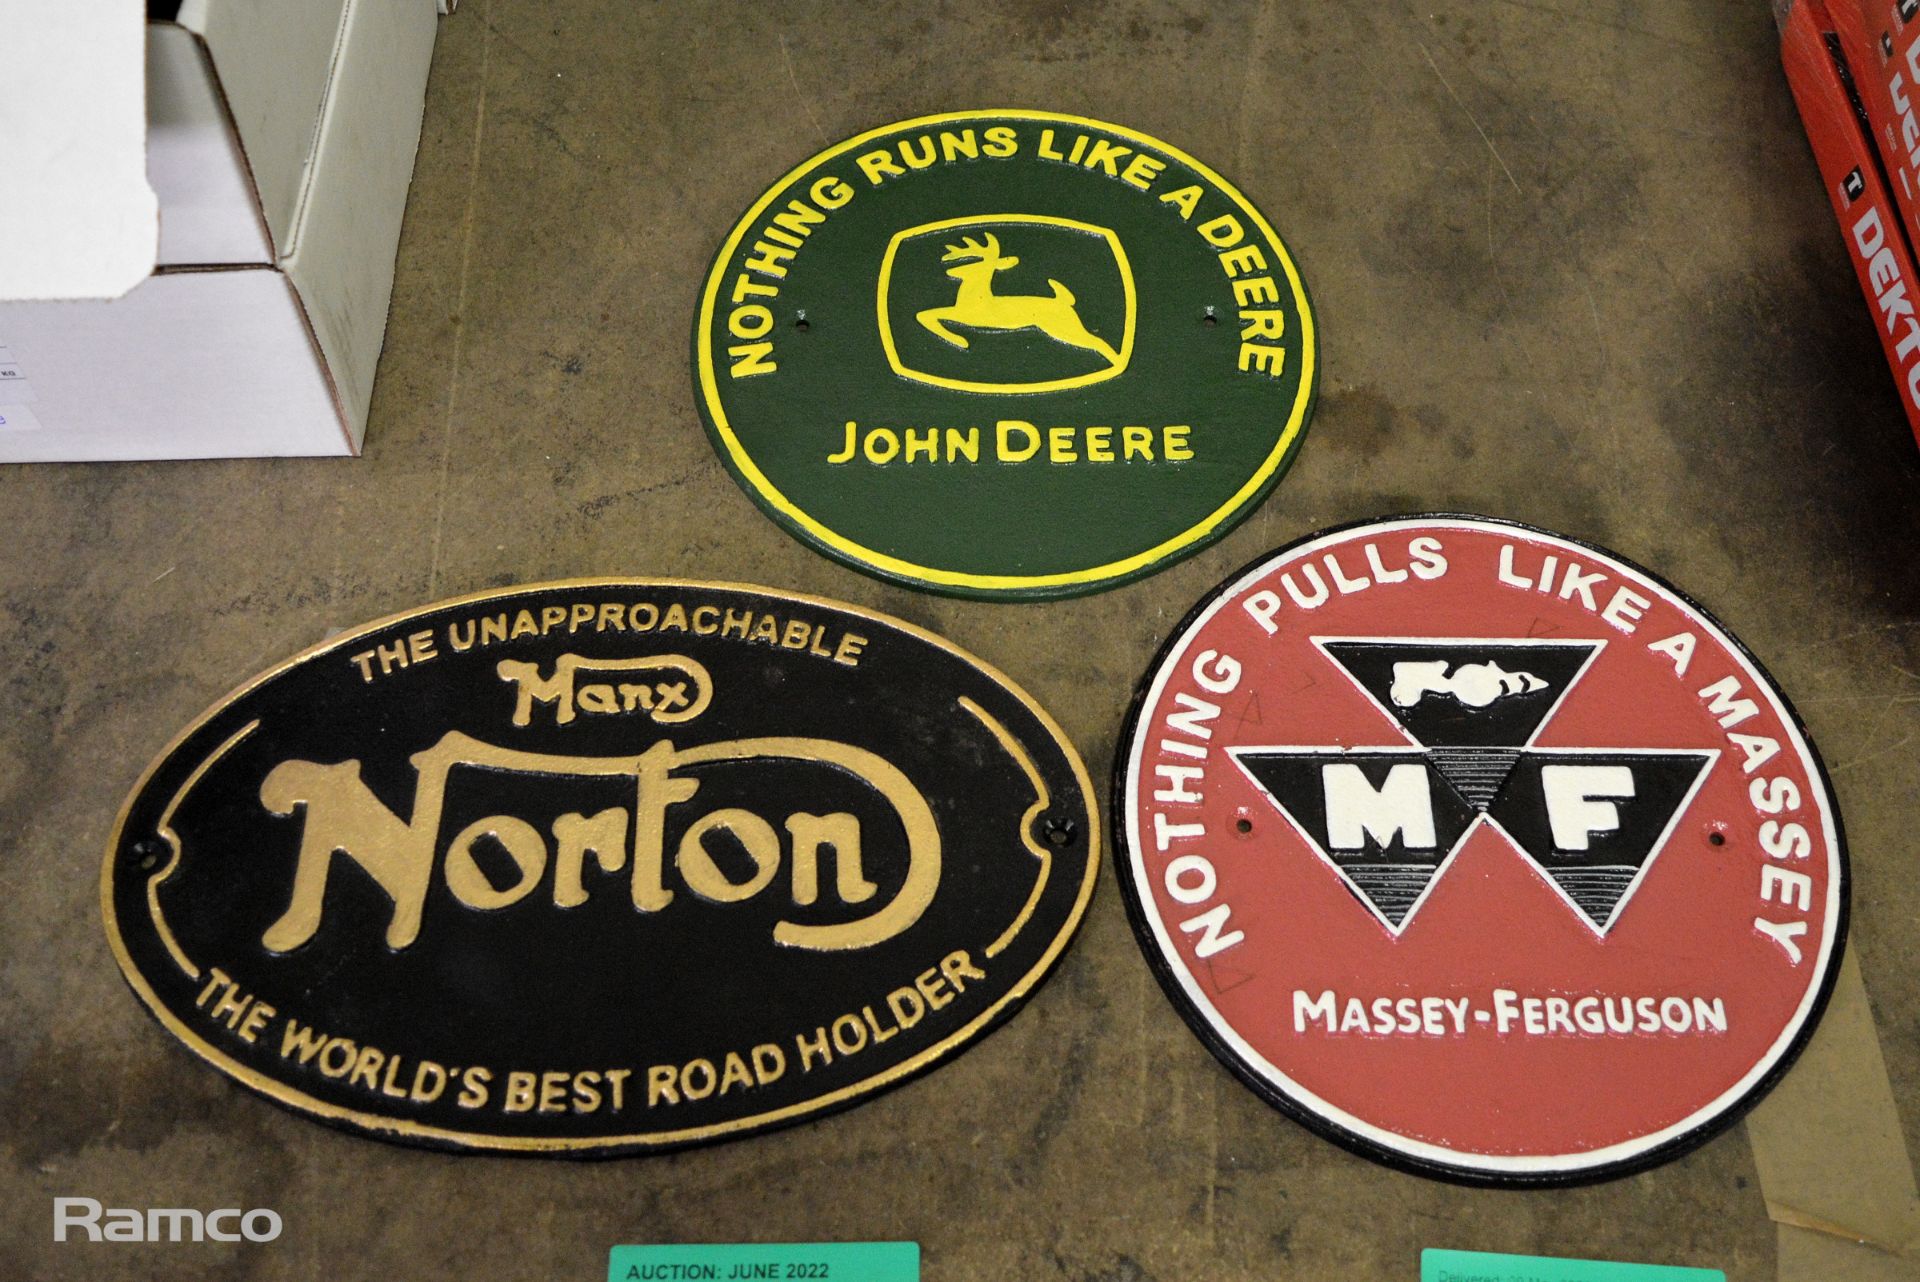 3 Cast signs - Norton, Massey-Ferguson, John Deere